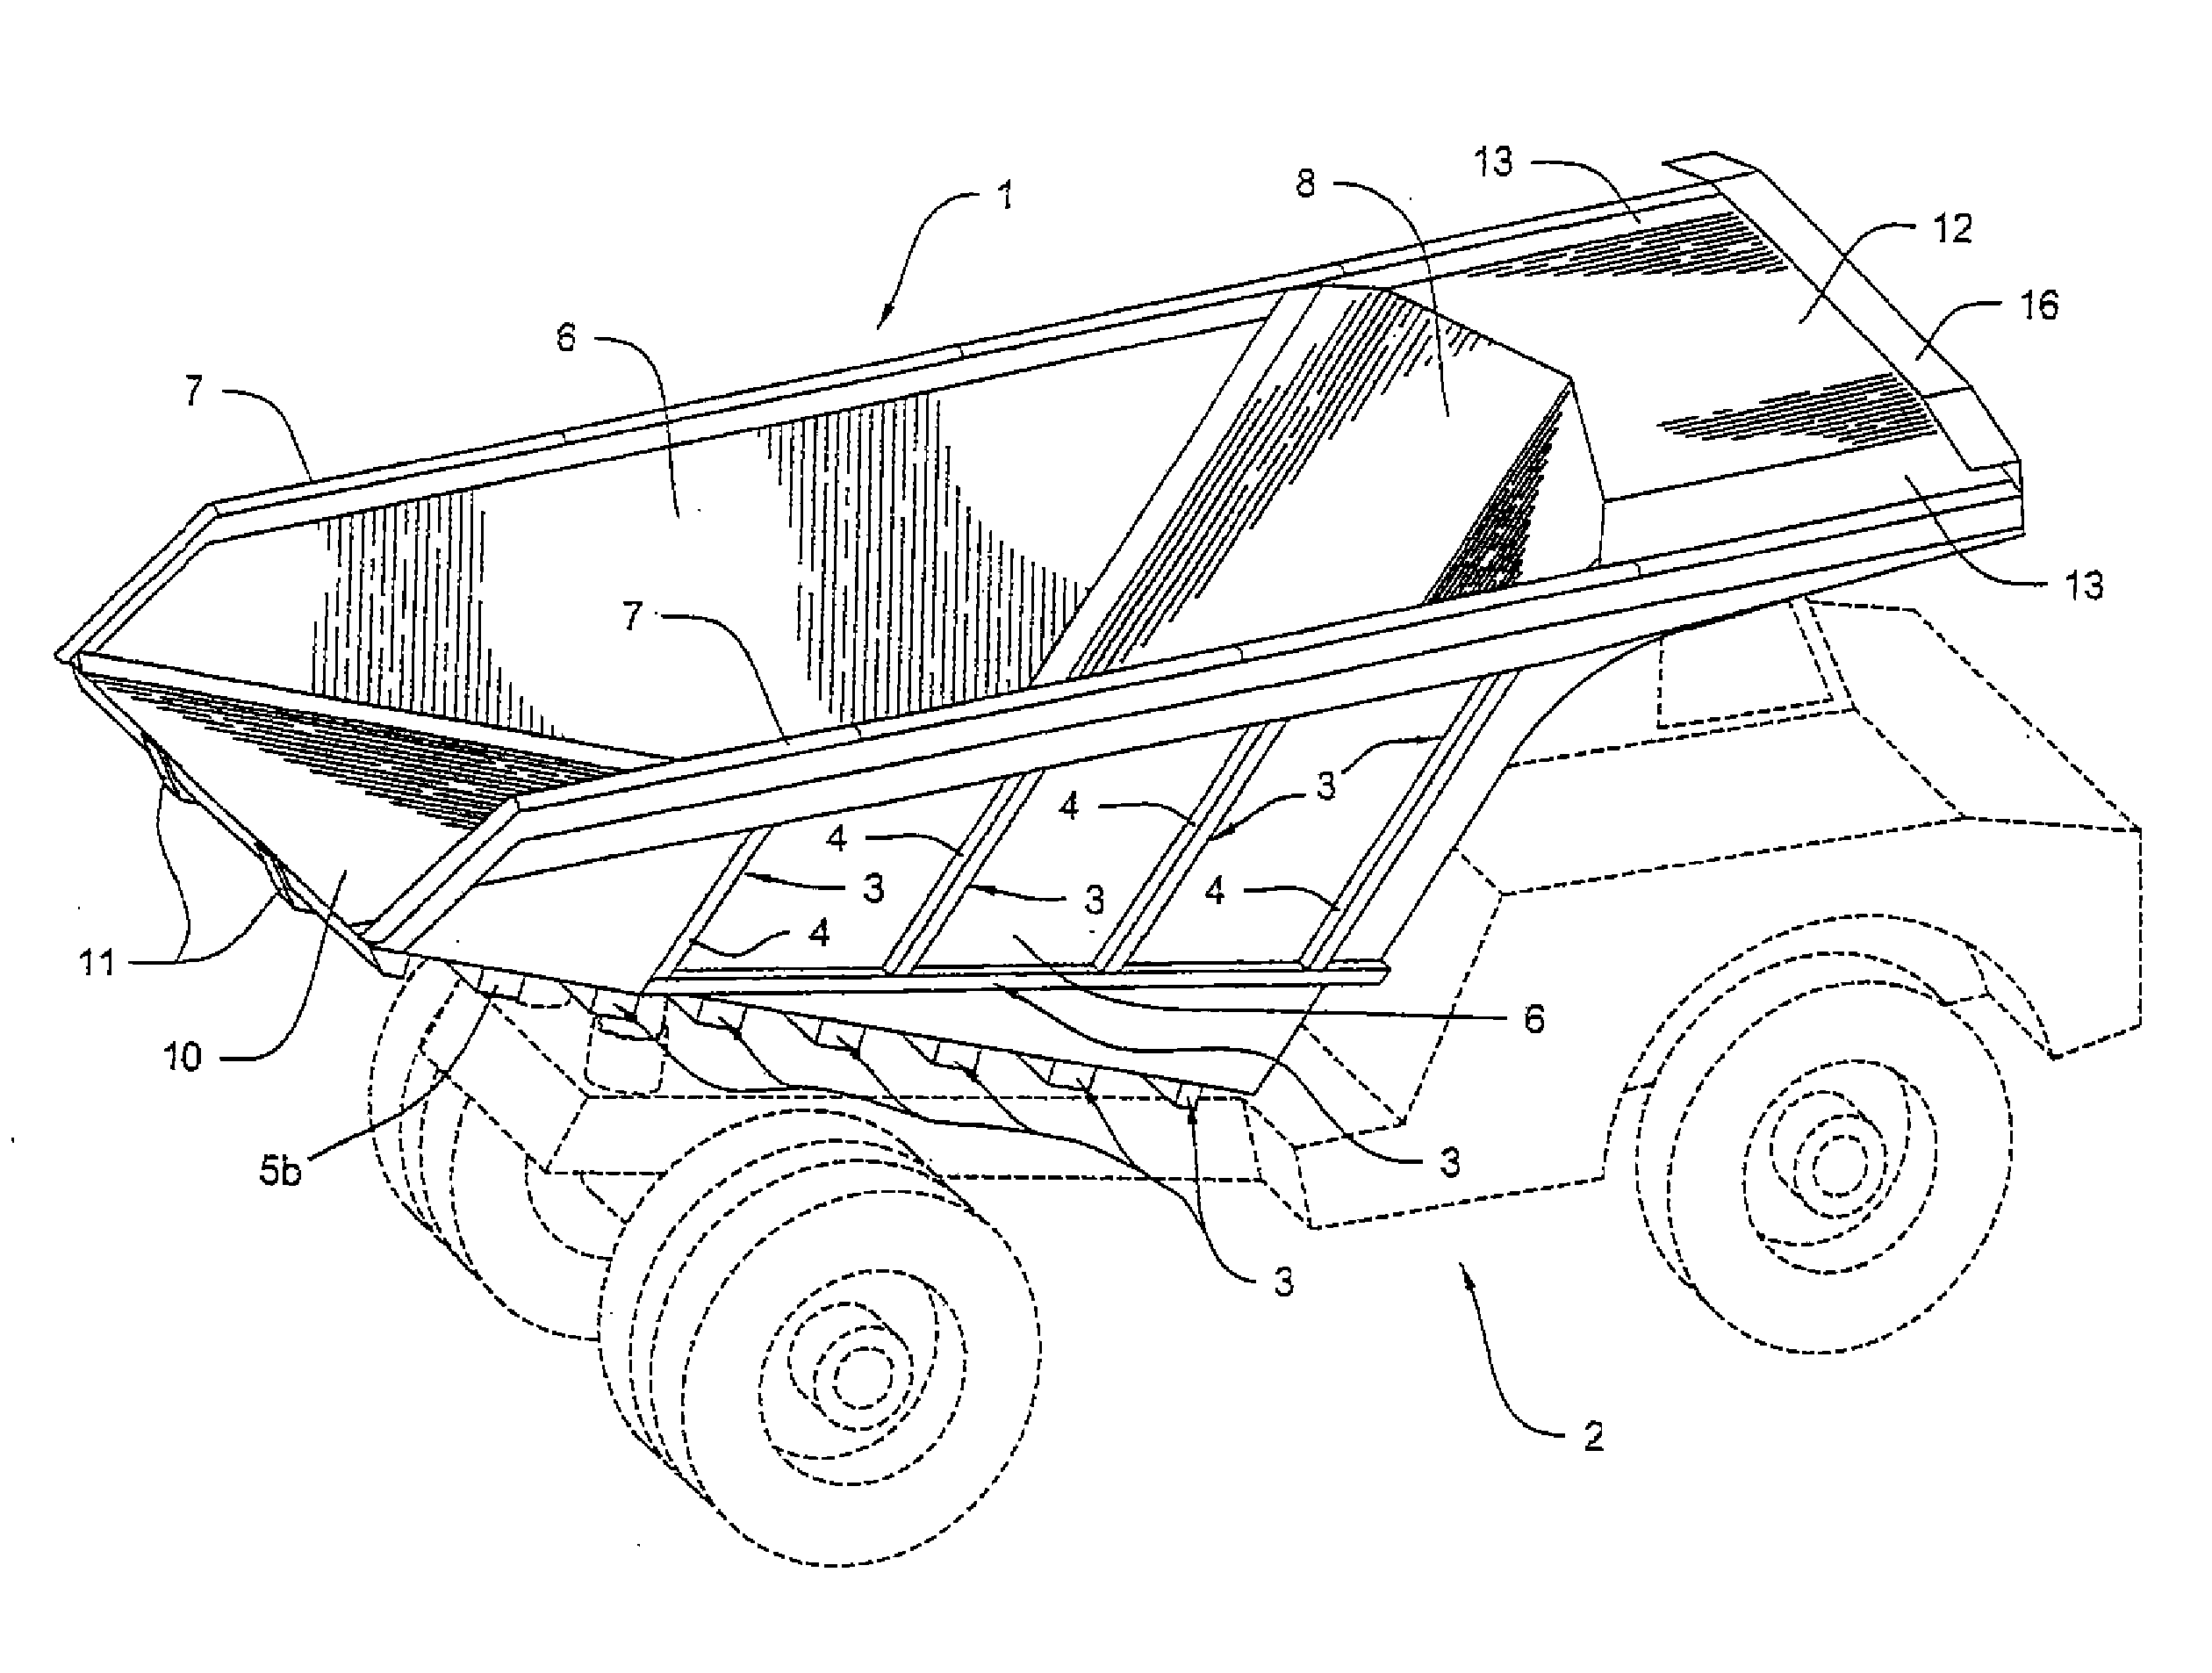 Tube-style truck body